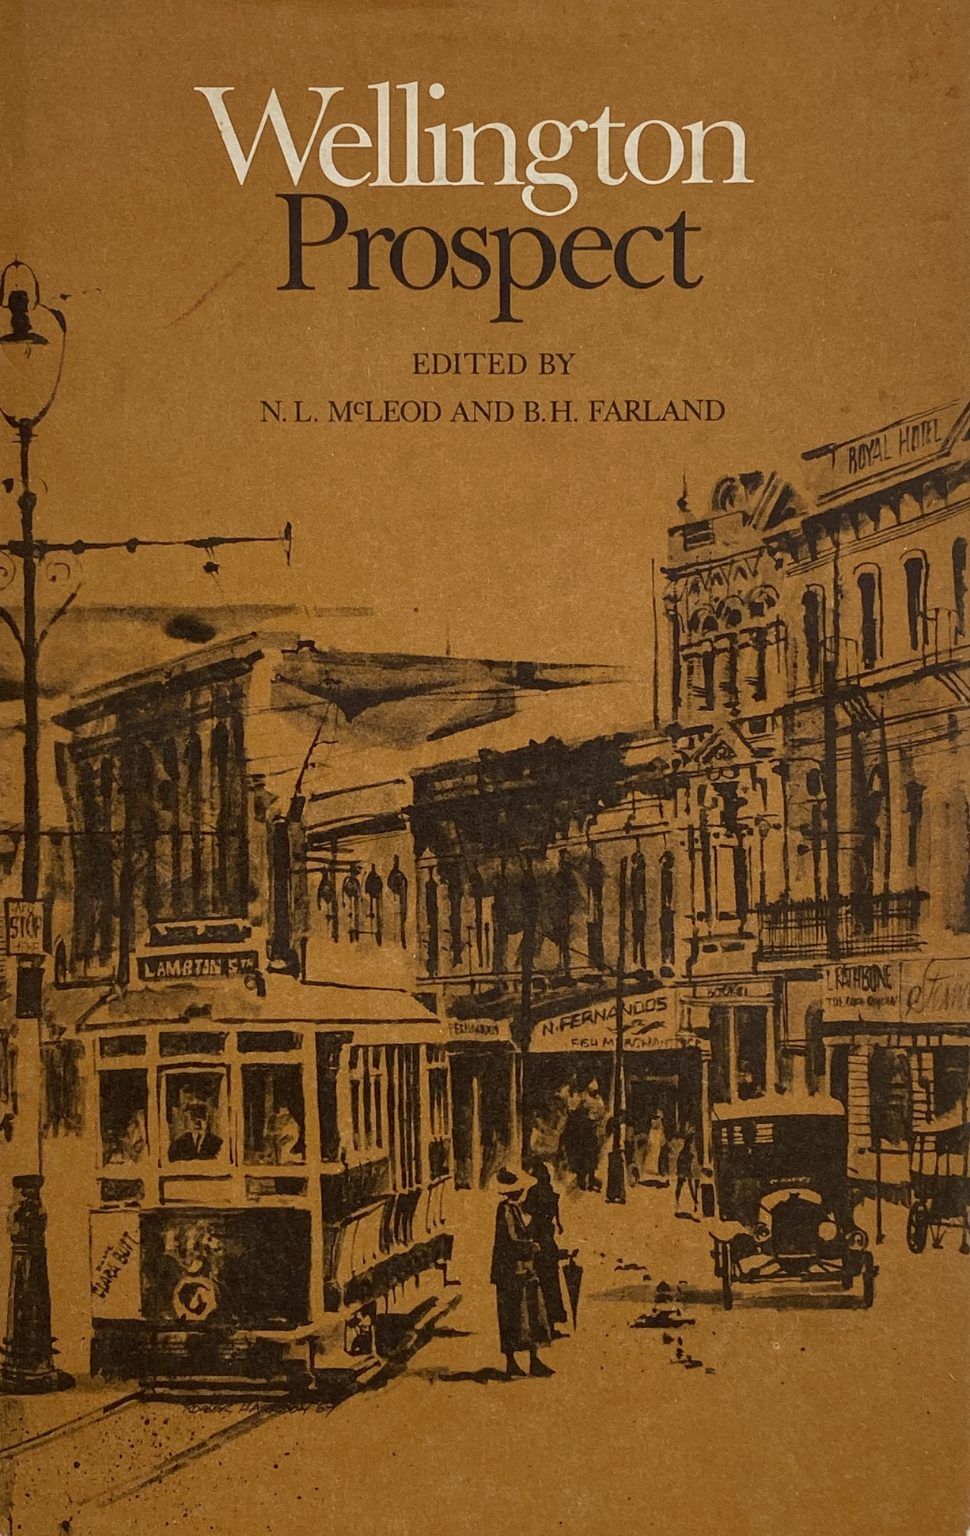 WELLINGTON PROSPECT: Survey of a City 1840-1970